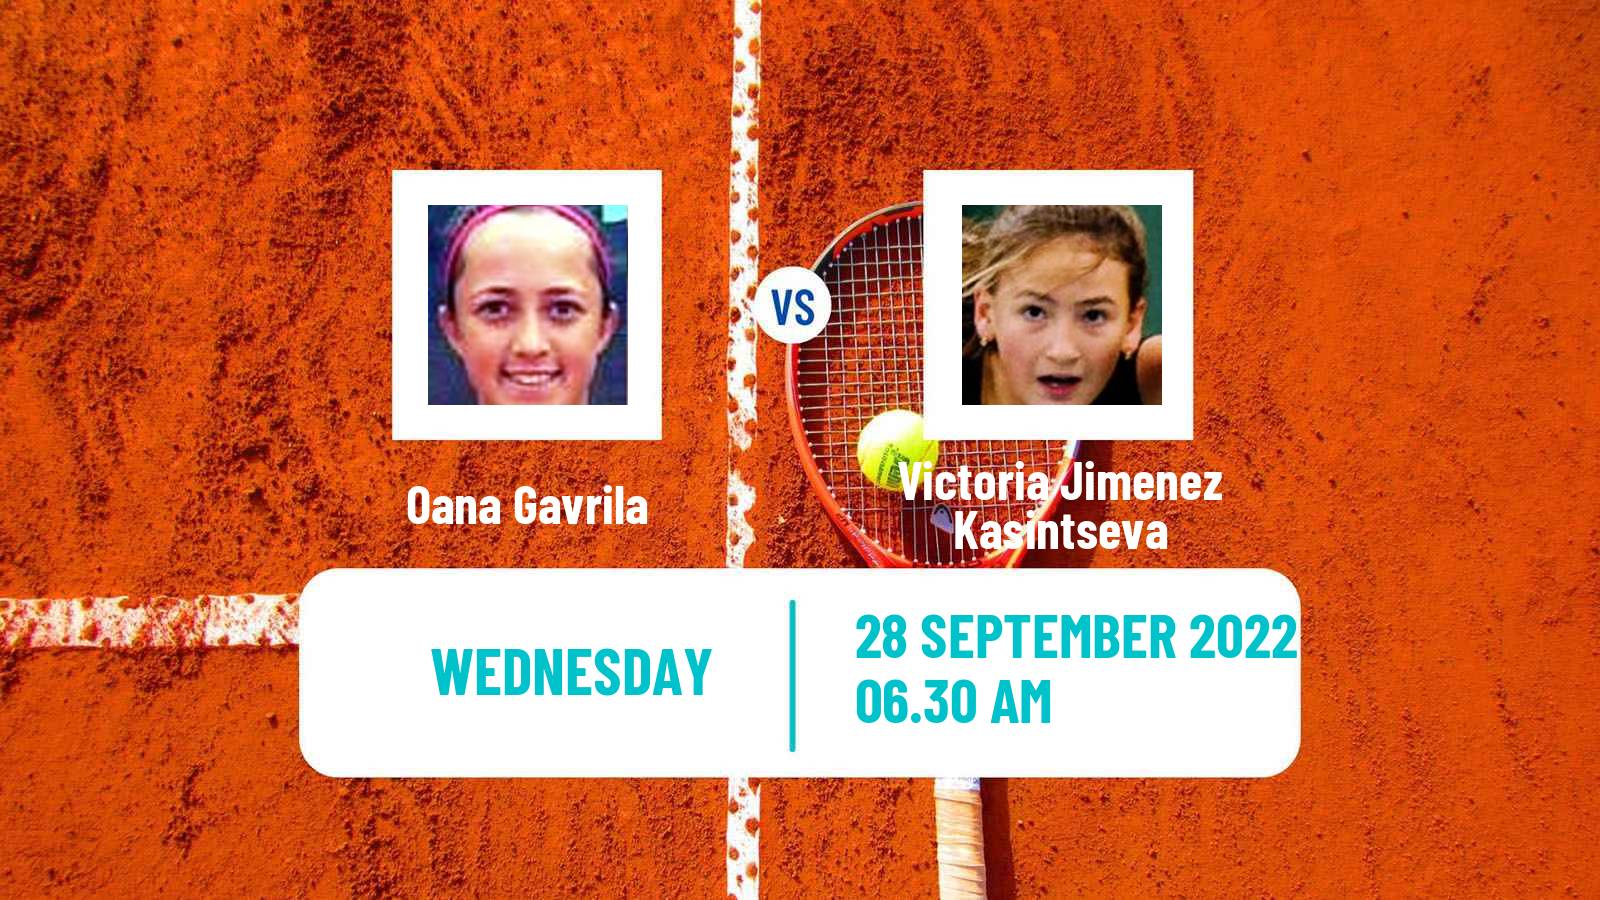 Tennis ITF Tournaments Oana Gavrila - Victoria Jimenez Kasintseva